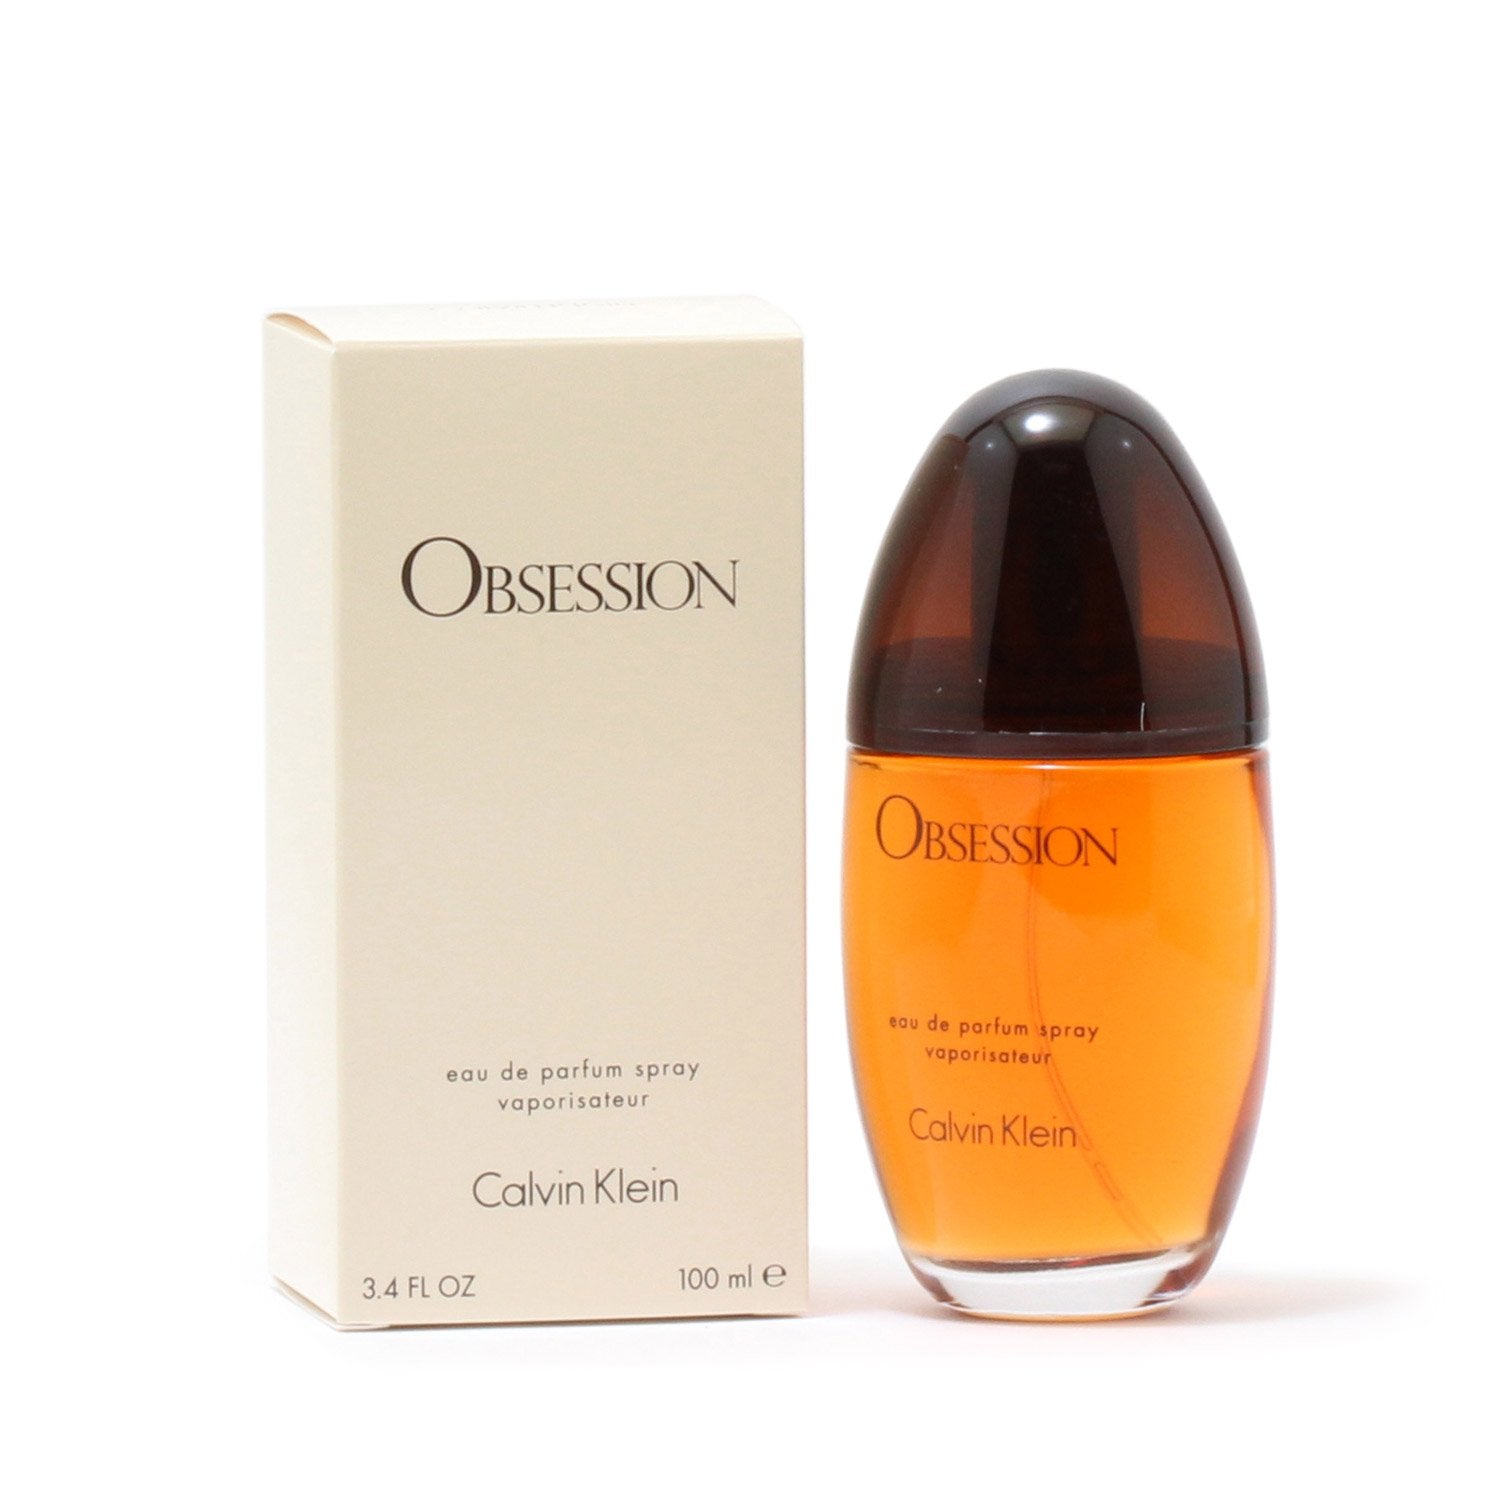 Obsession Eau de Parfum Spray by Calvin Klein - 1.7 oz